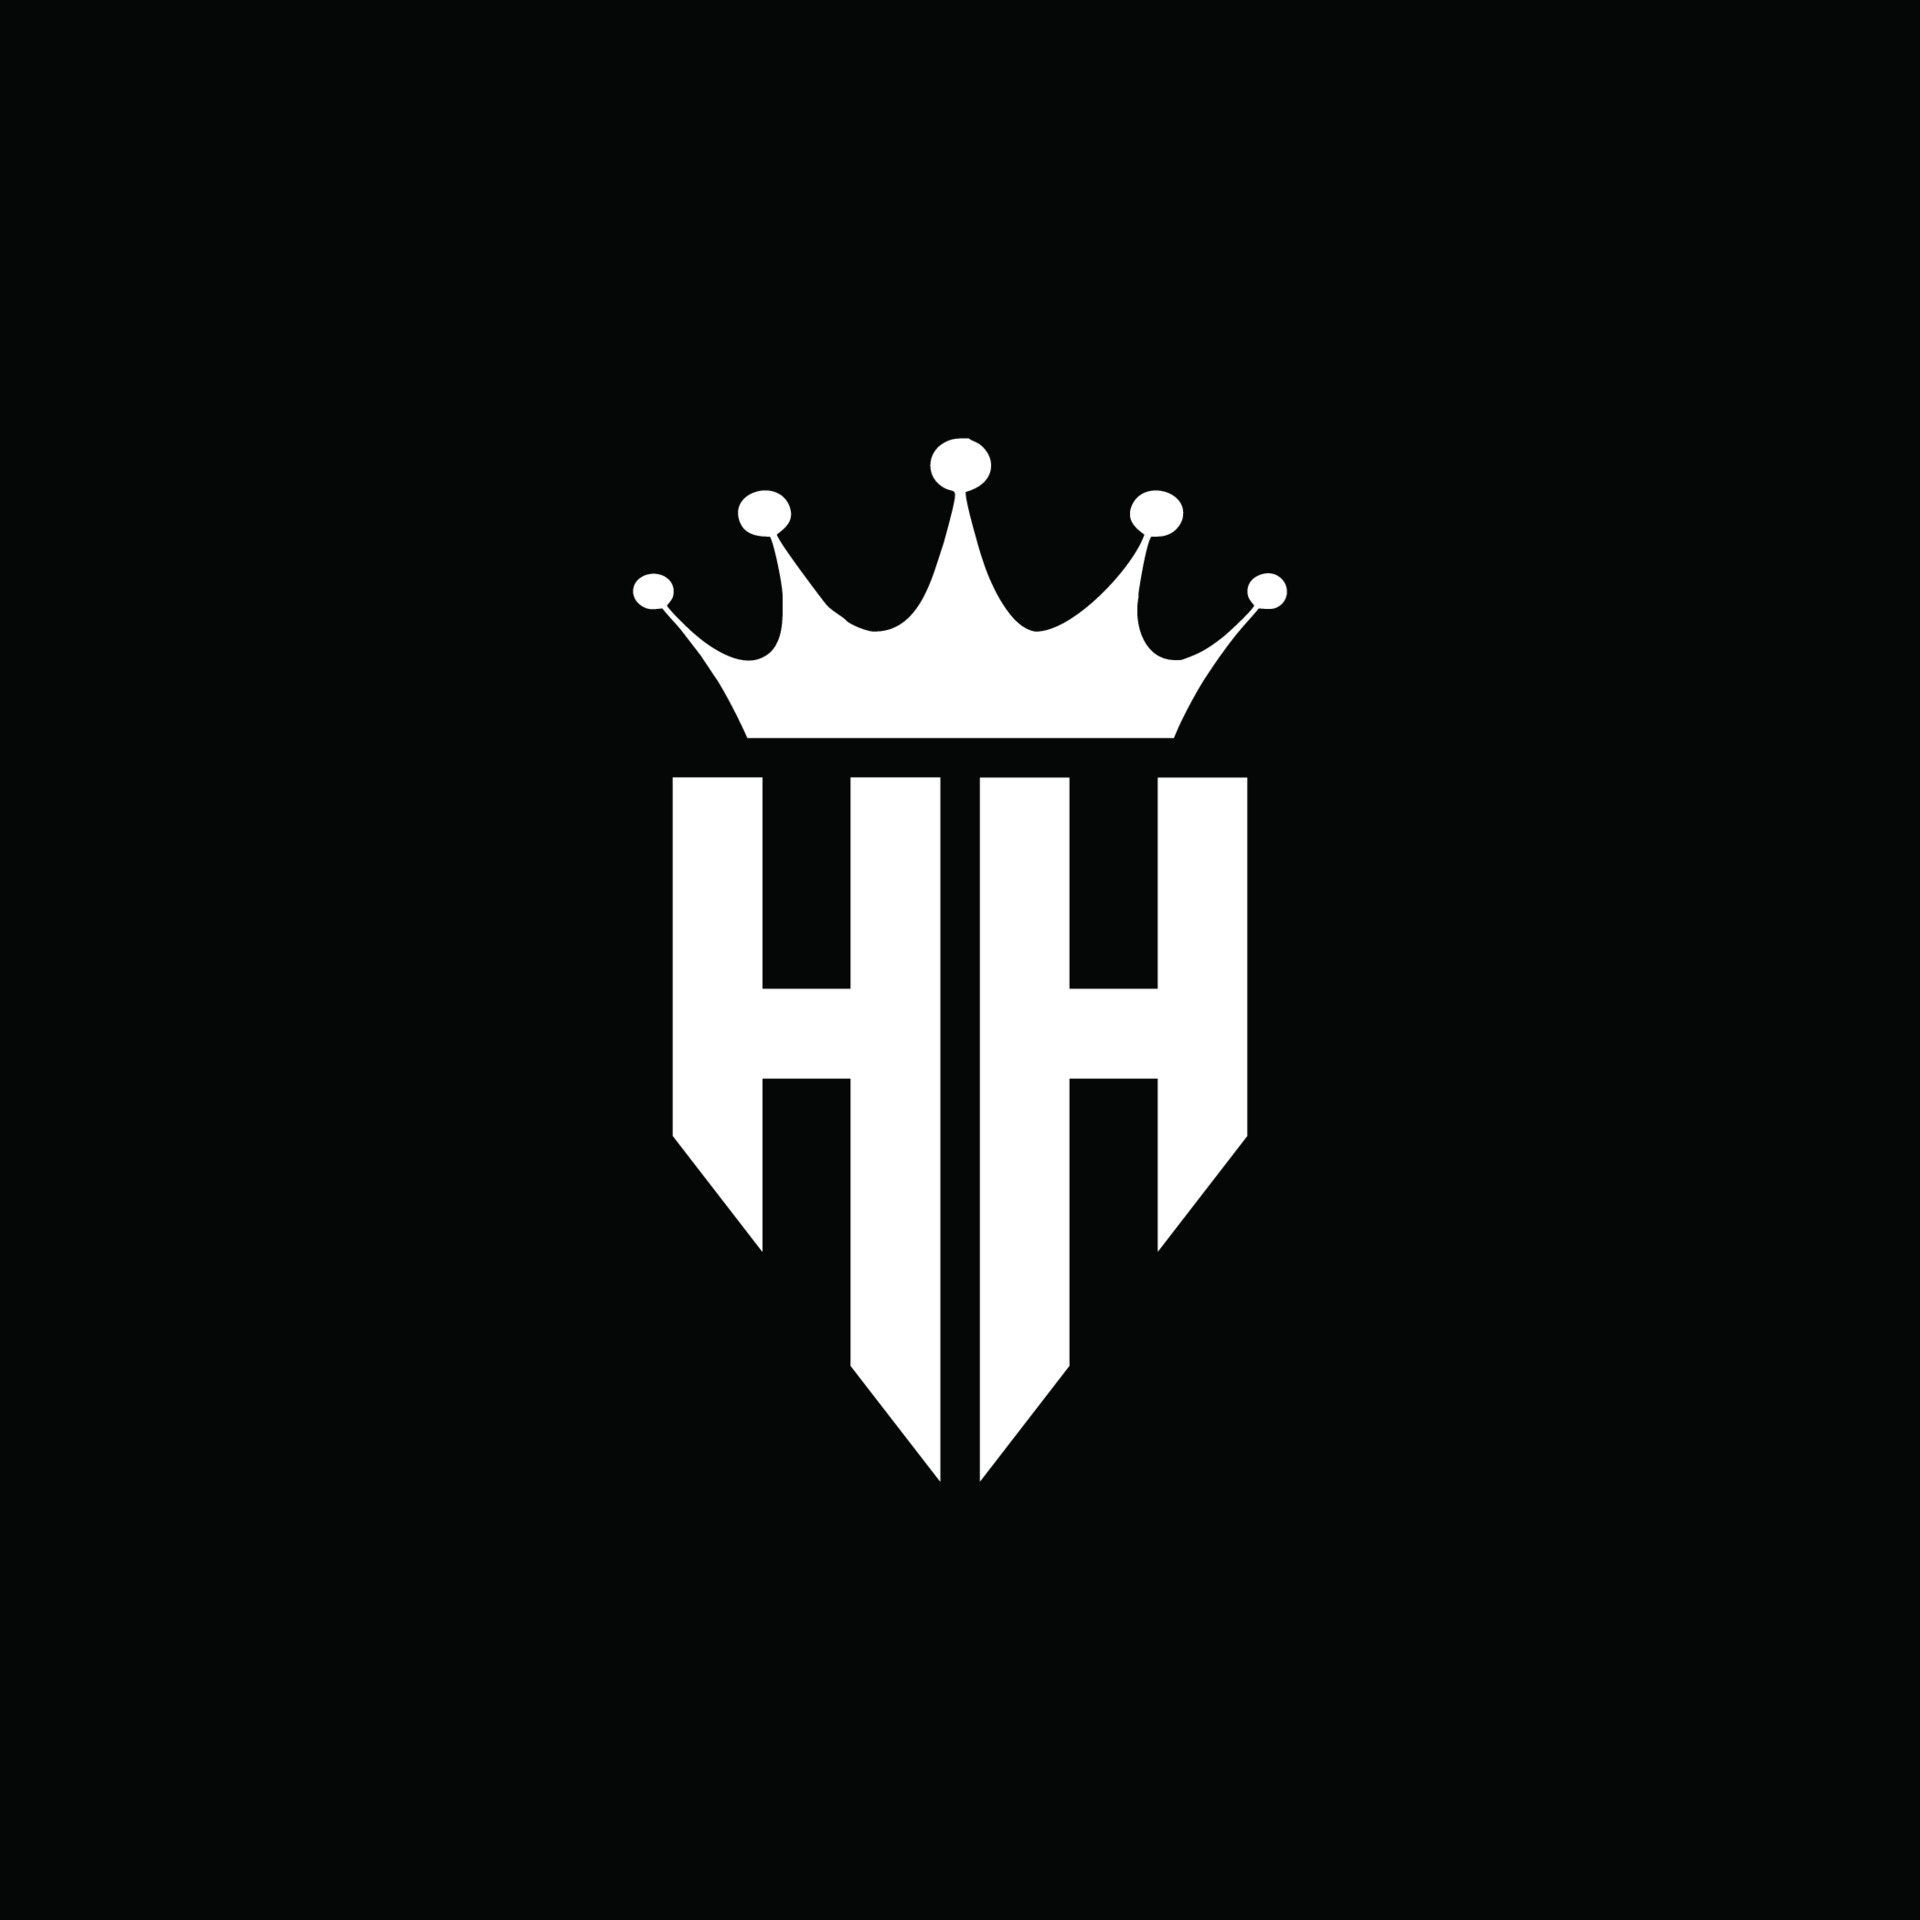 HH logo monogram emblem style with crown shape design template